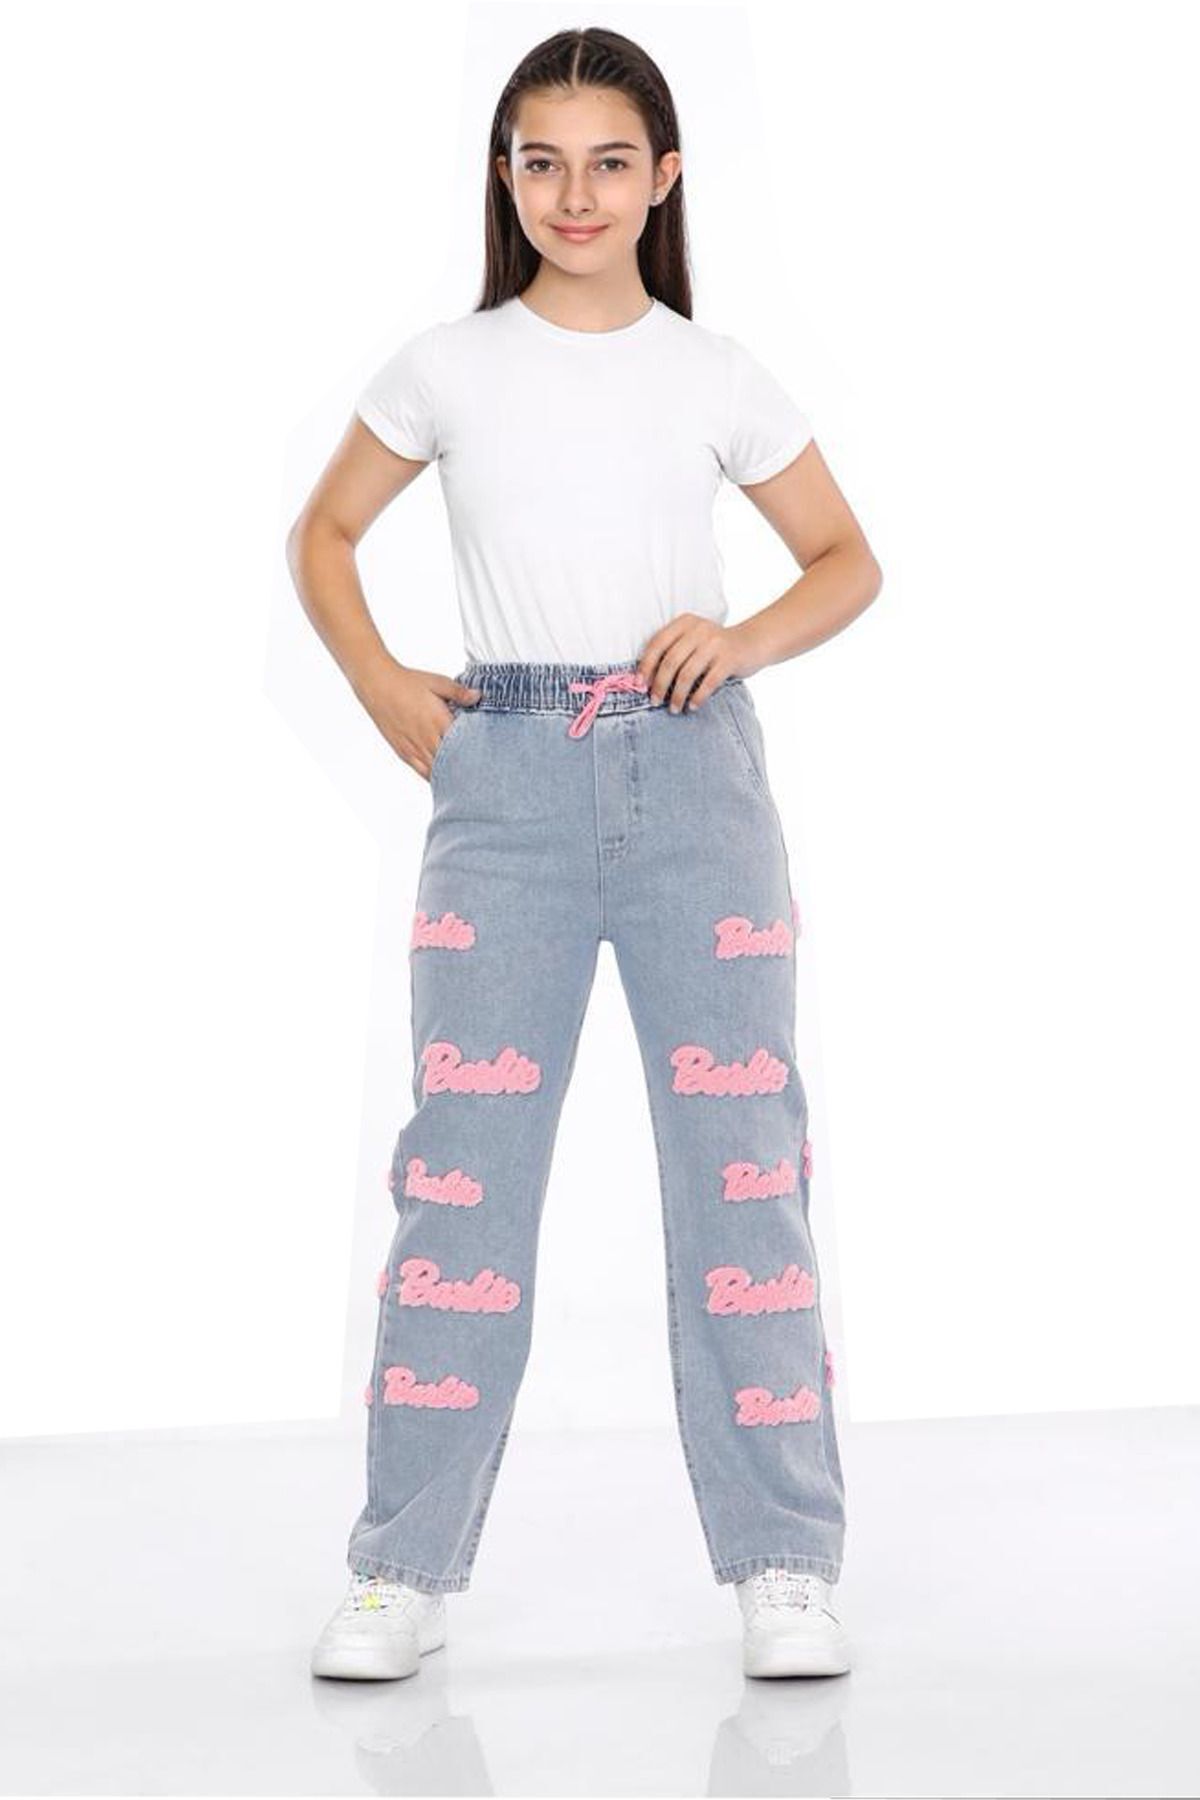 Asortik Kids Kız Çocuk Barbie Nakışlı Komple Bel Lastikli Bol Kesim Kot Jean Pantolon